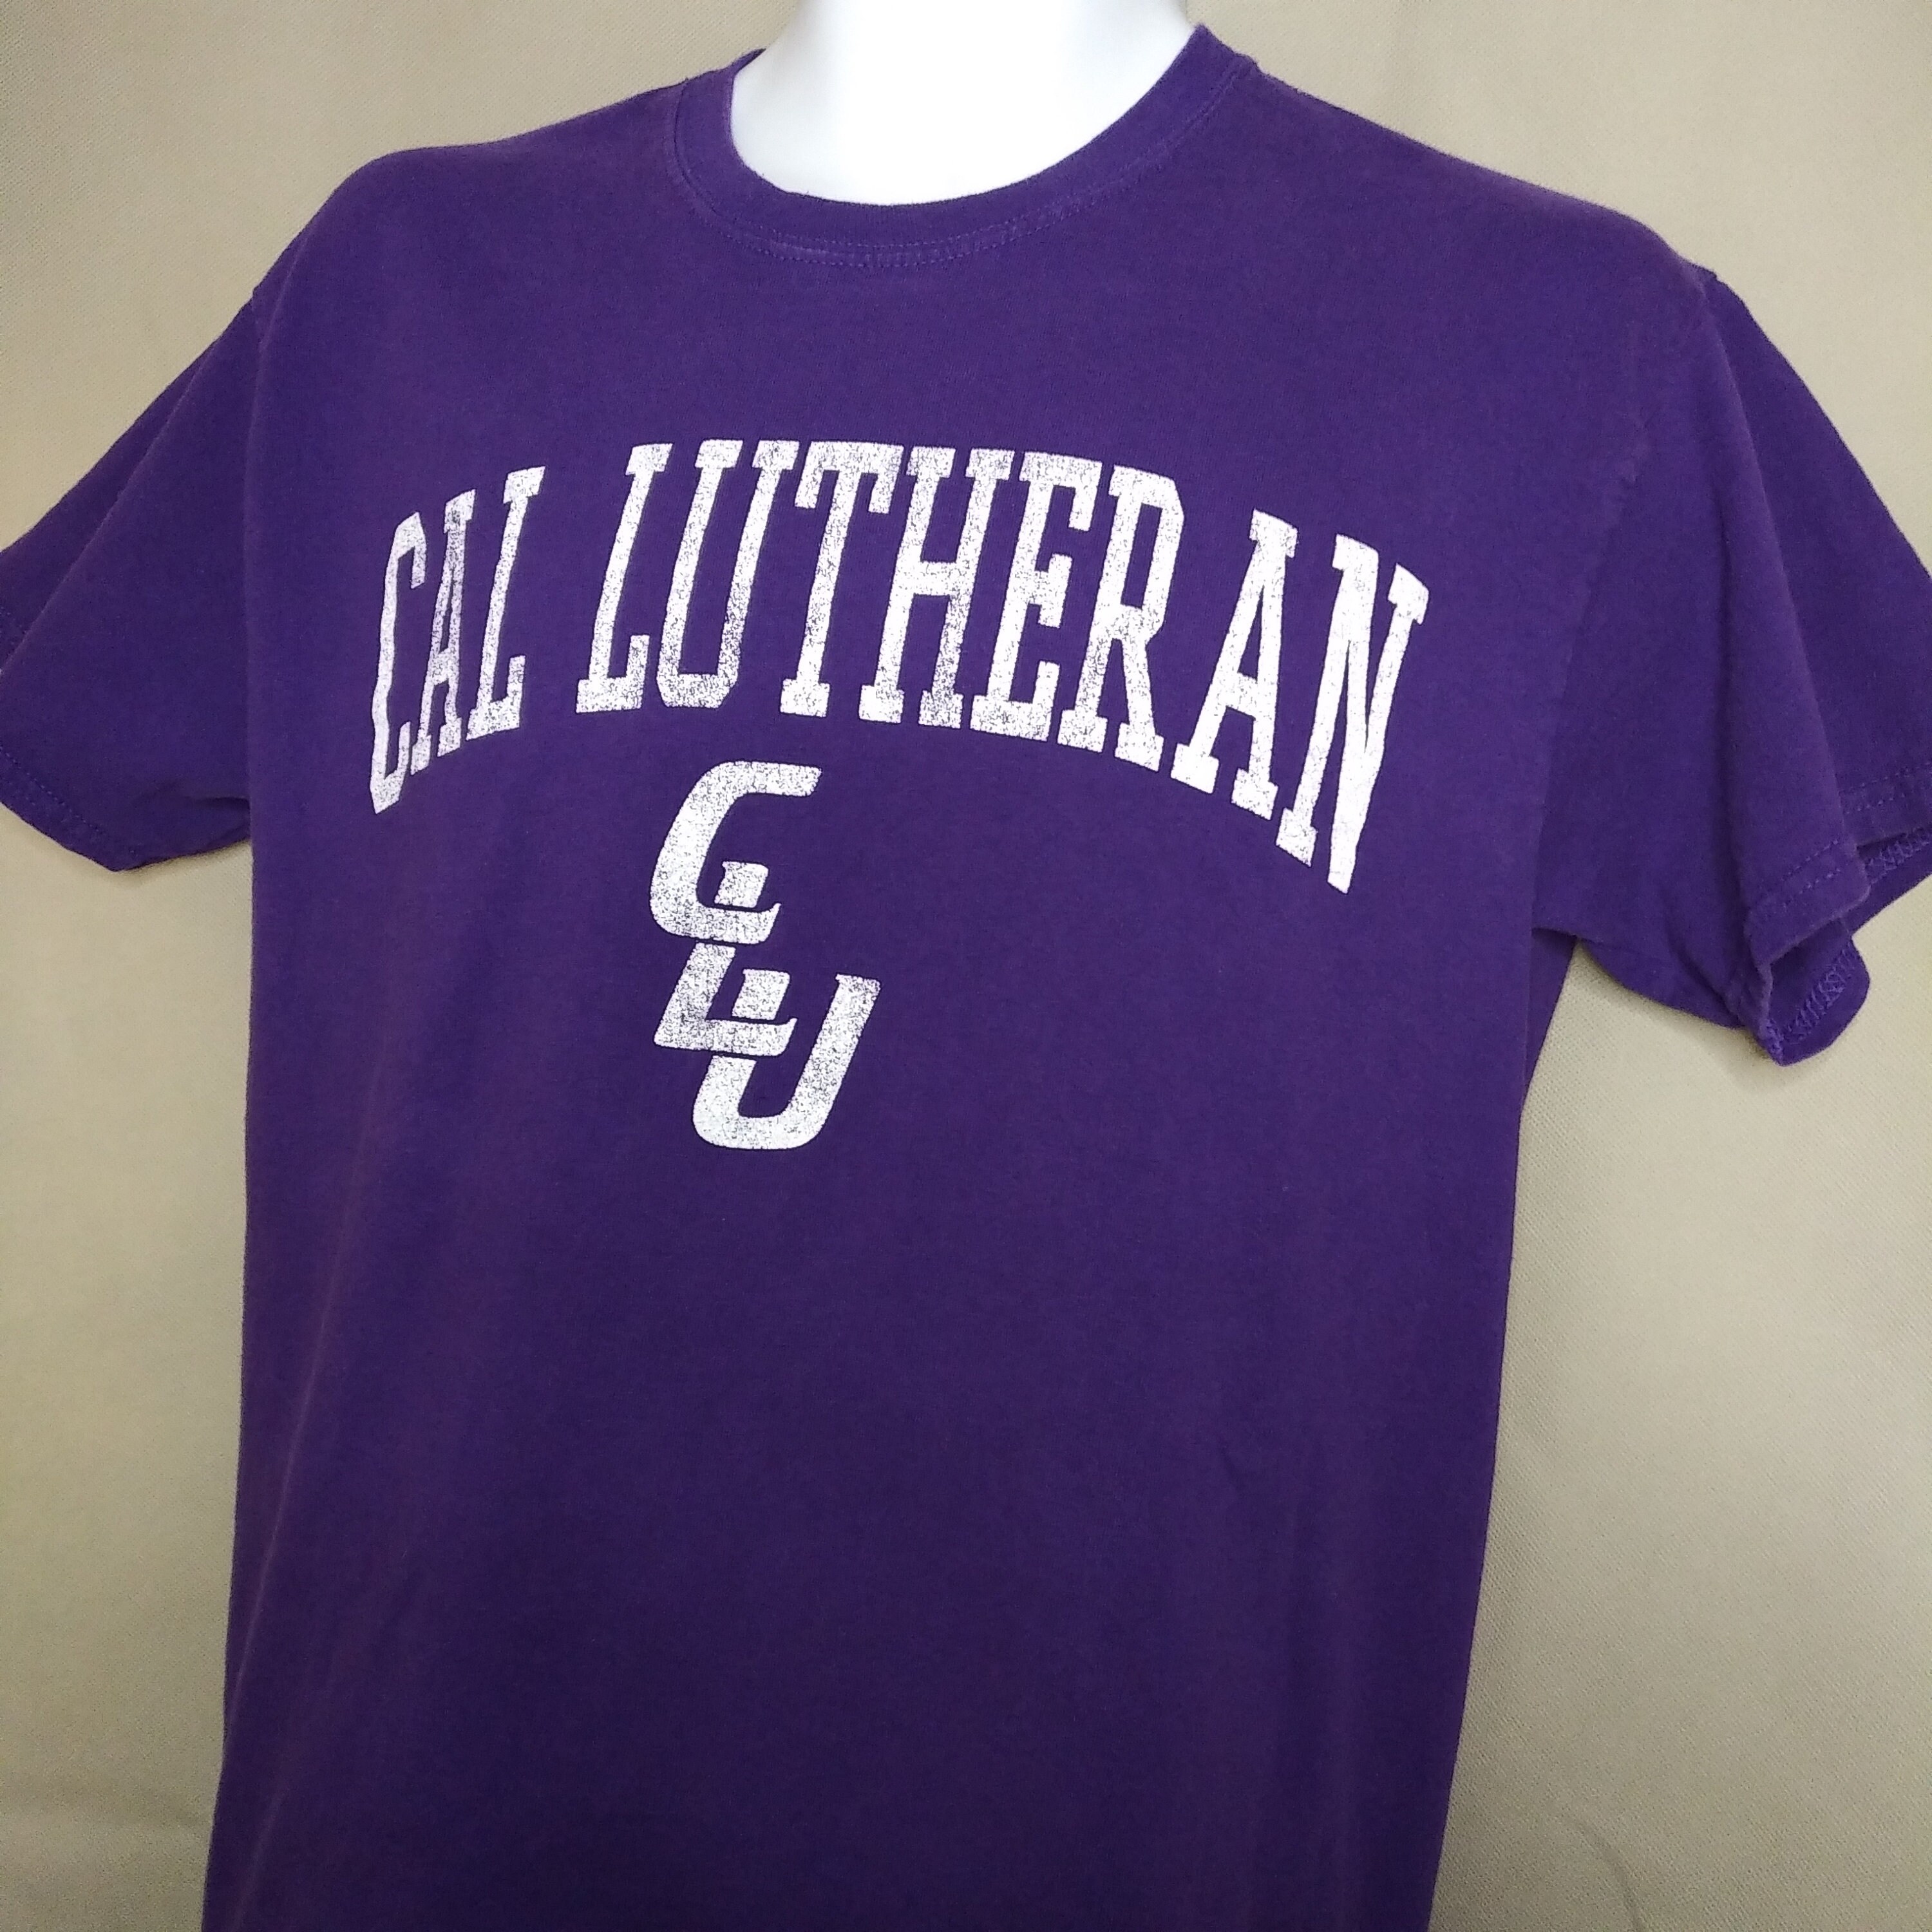 Vintage Cal Lutheran University Shirt - Etsy New Zealand